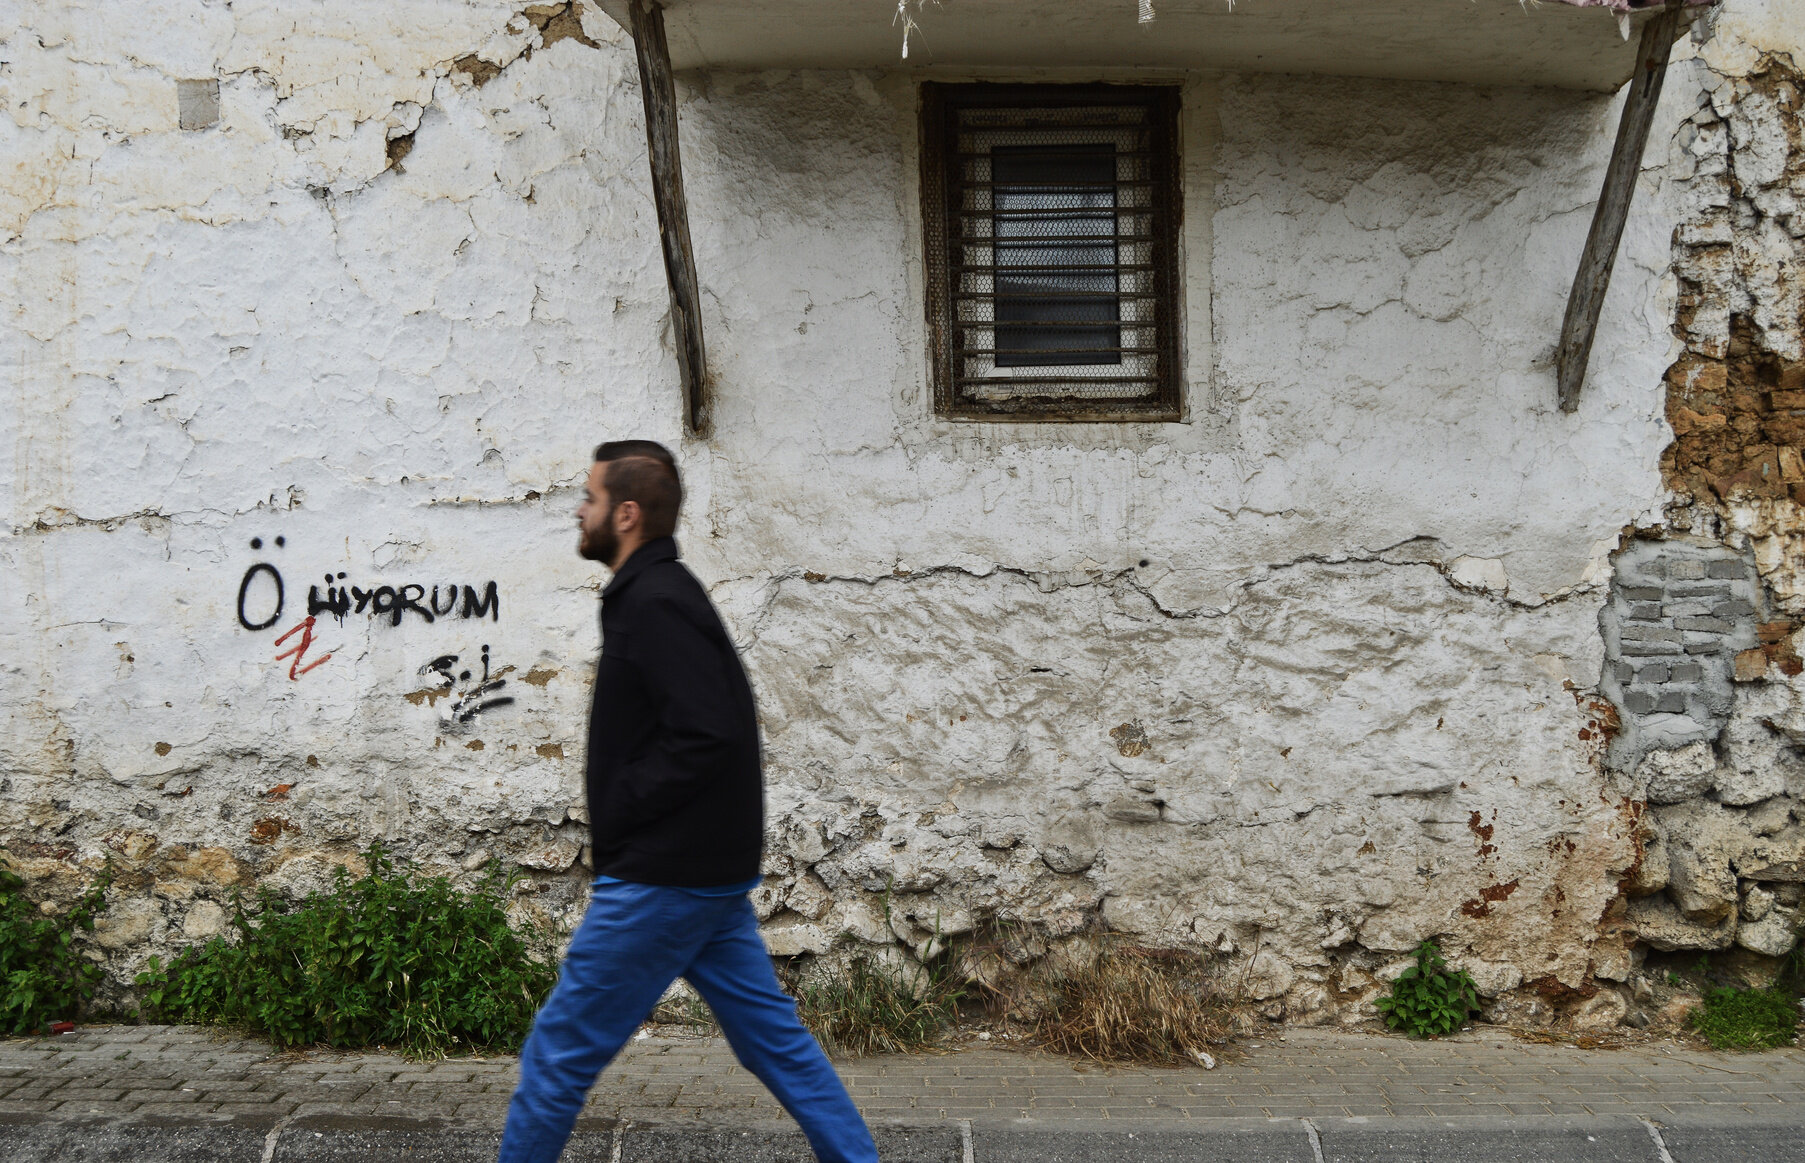 A man walks by a graffitied wall in Prizren.